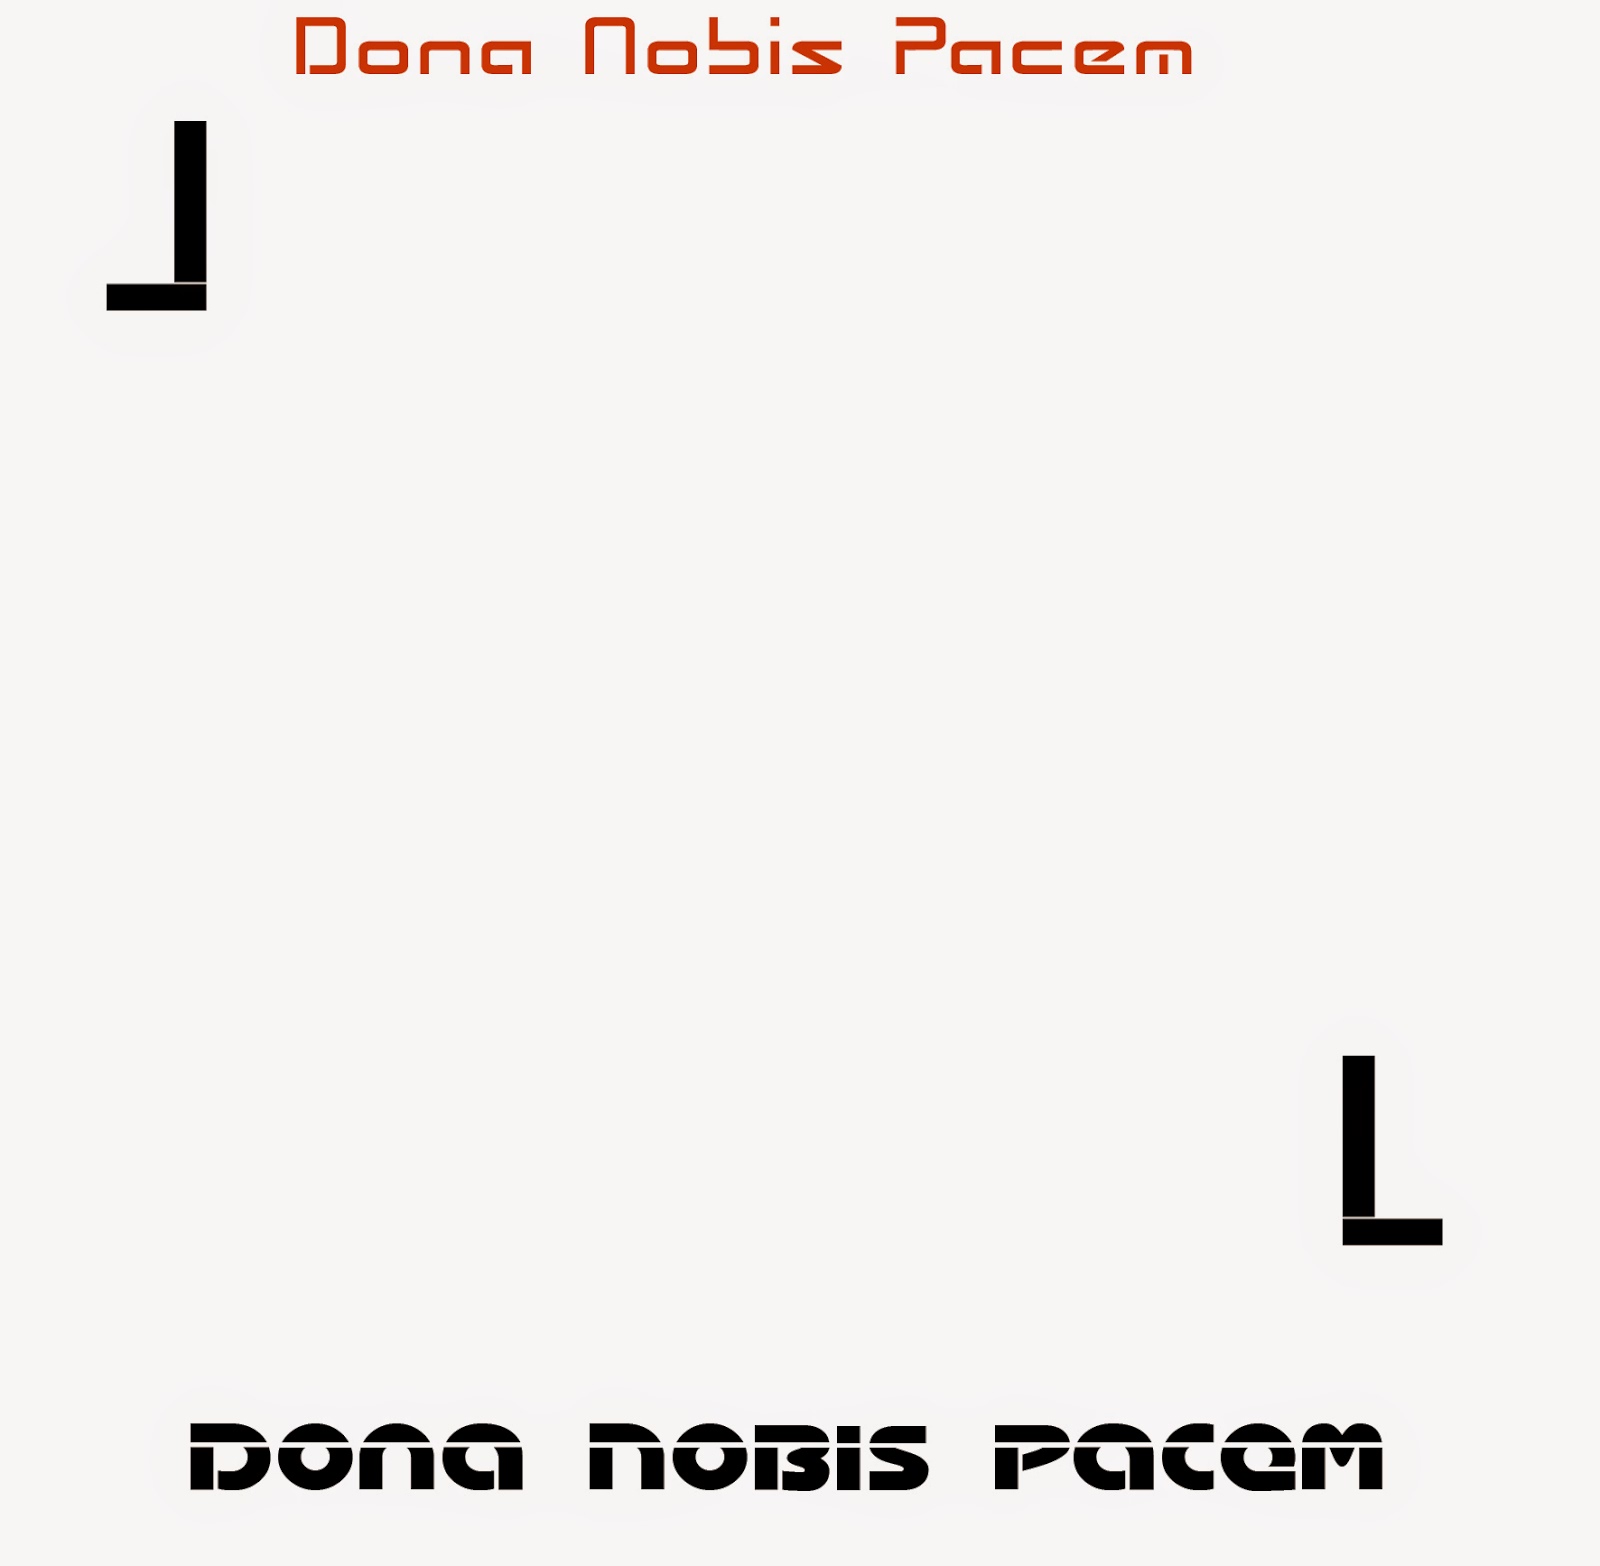 Stencil multicapa gratis imprimible Dona Nobis Pacem4